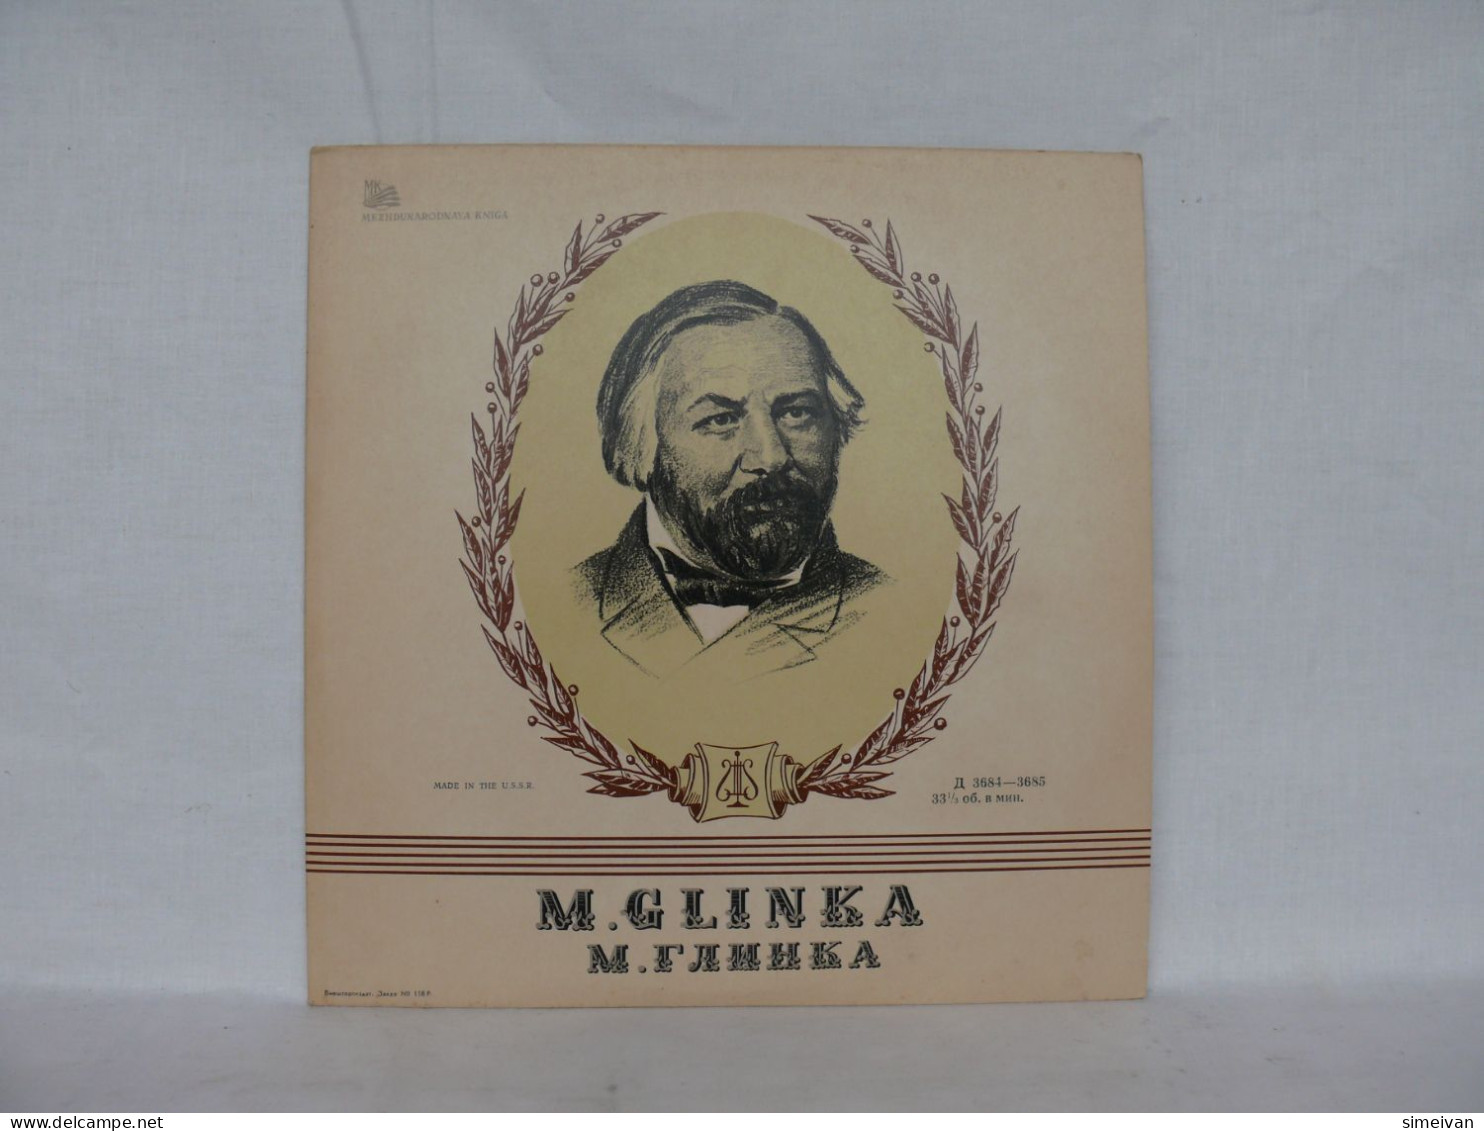 M. GLINKA "RUSLAND AND LUDMILA" "IVAN SUSANIN" VINYL MADE IN USSR D3684-5 #1680 - Opera